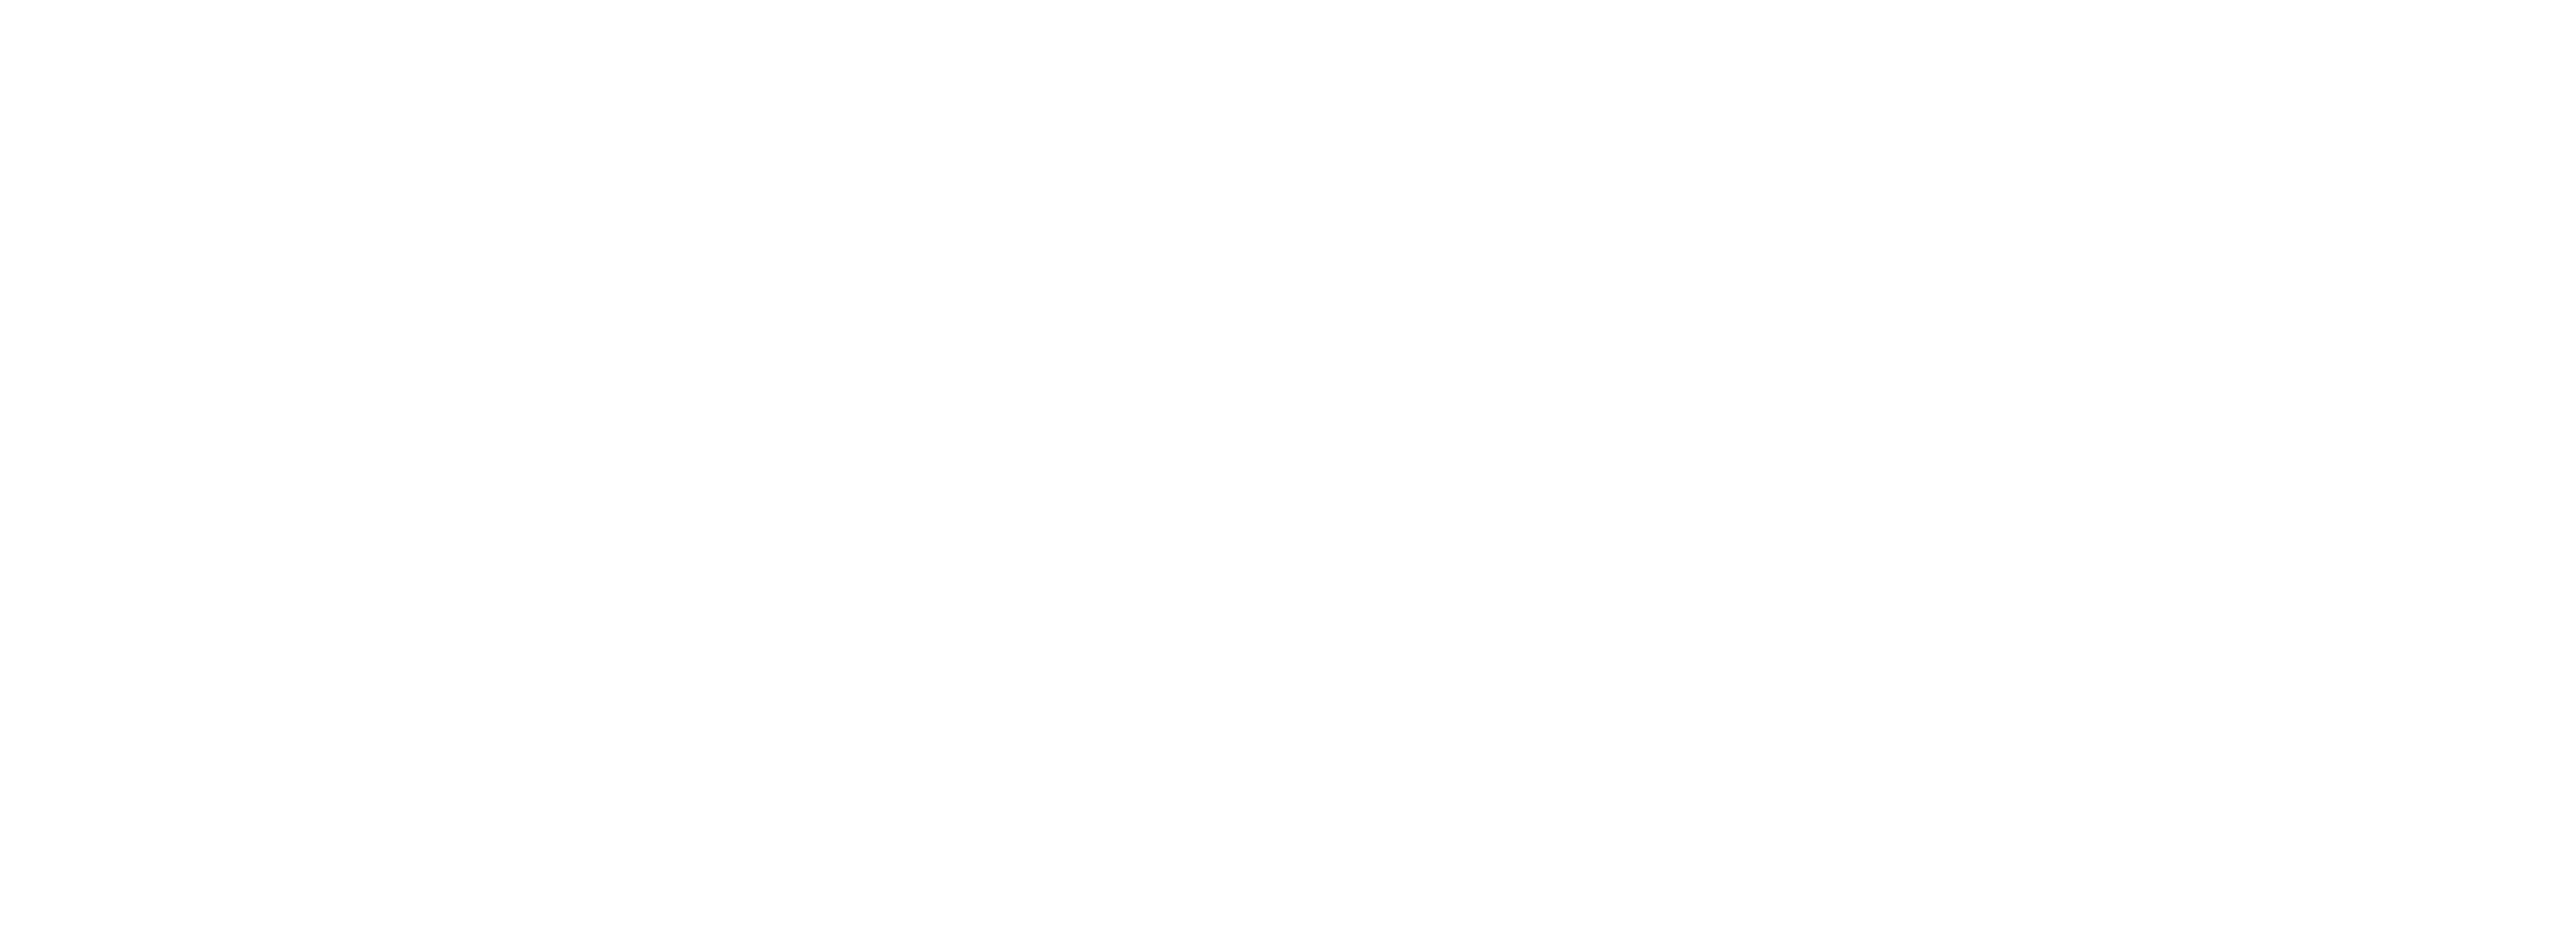 Official ATU Logos